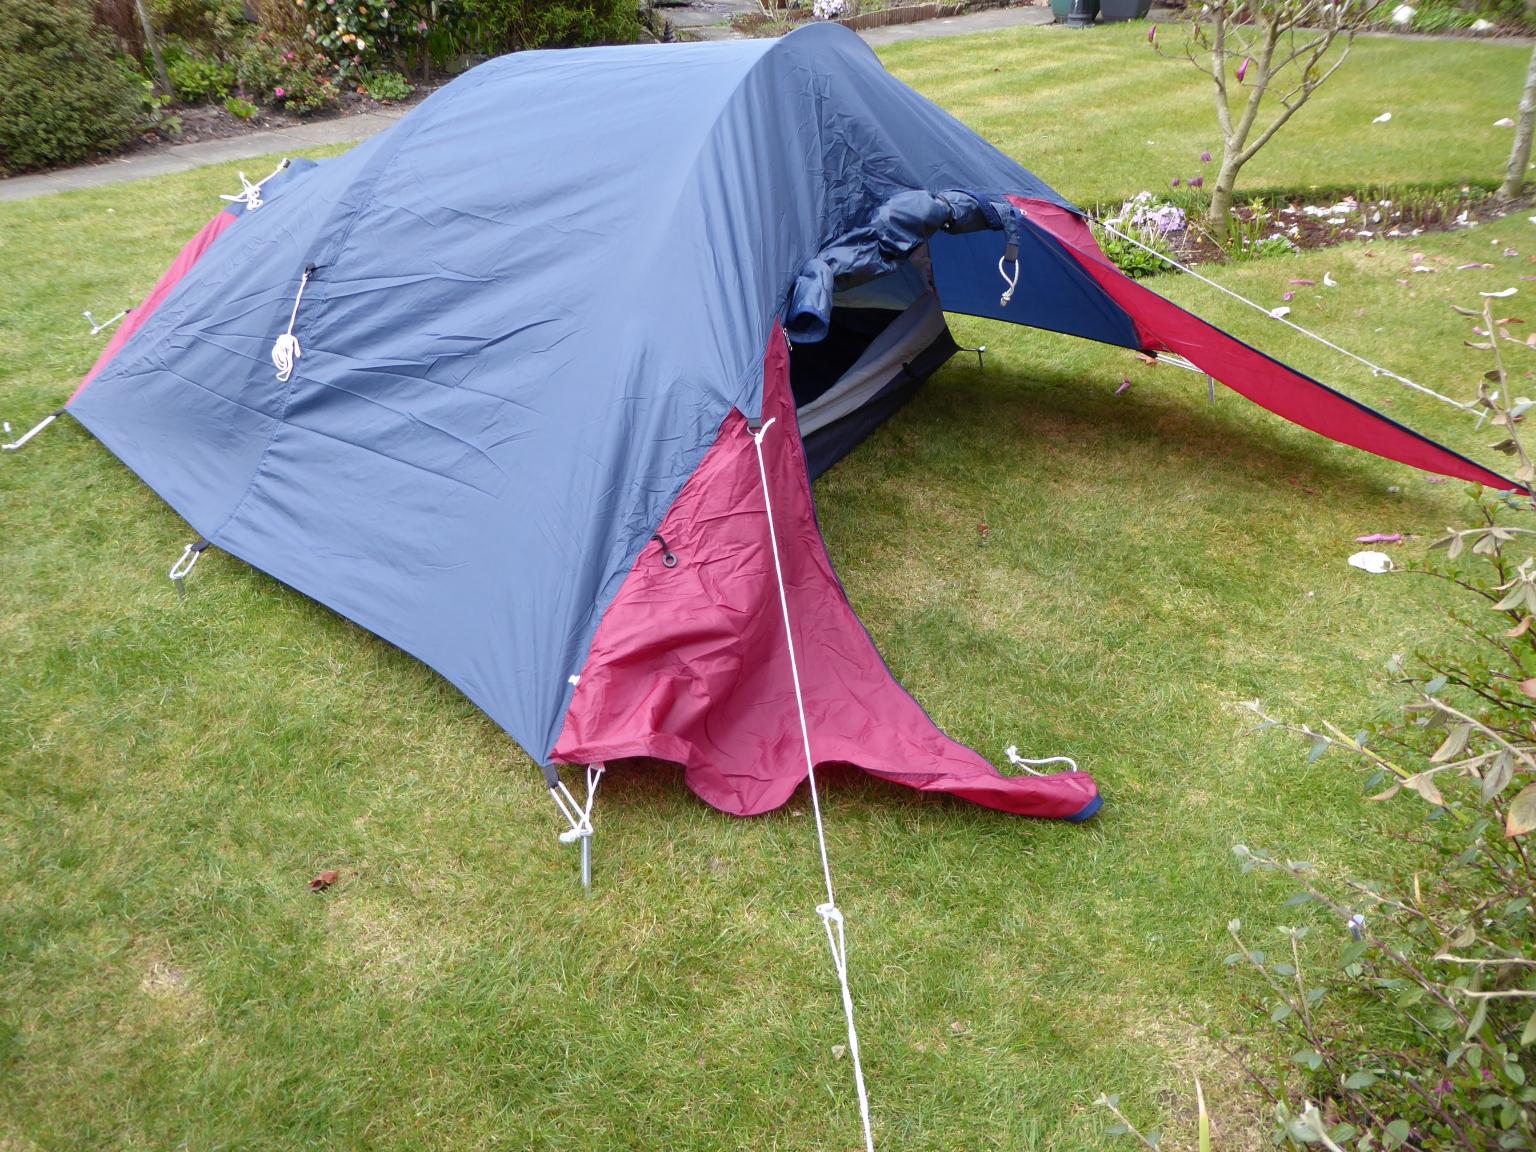 Blacks Stormshield 2 man backpack tent in WA5 Burtonwood for £10.00 for ...